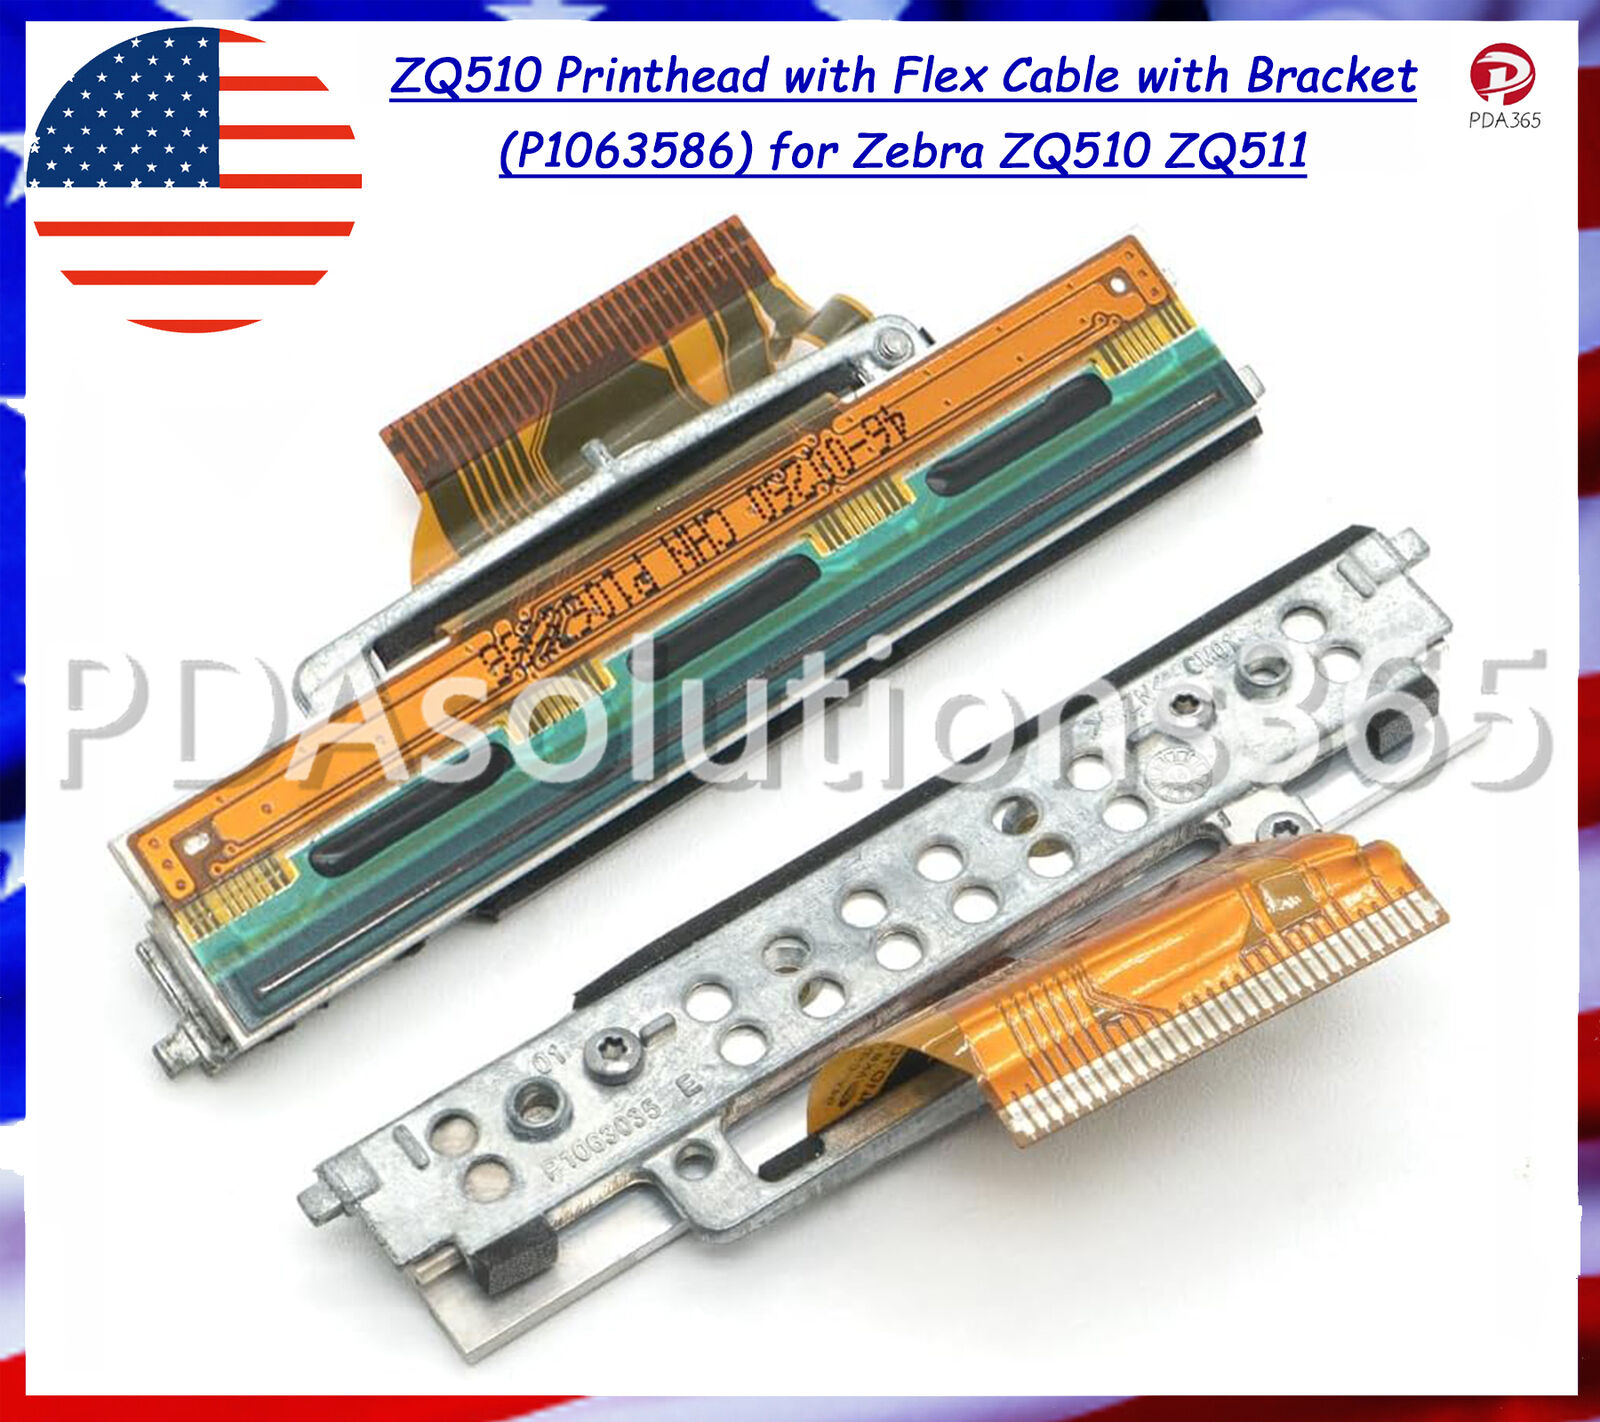 ZQ510 Printhead with Flex Cable with Bracket (P1063586) for Zebra ZQ510 ZQ511